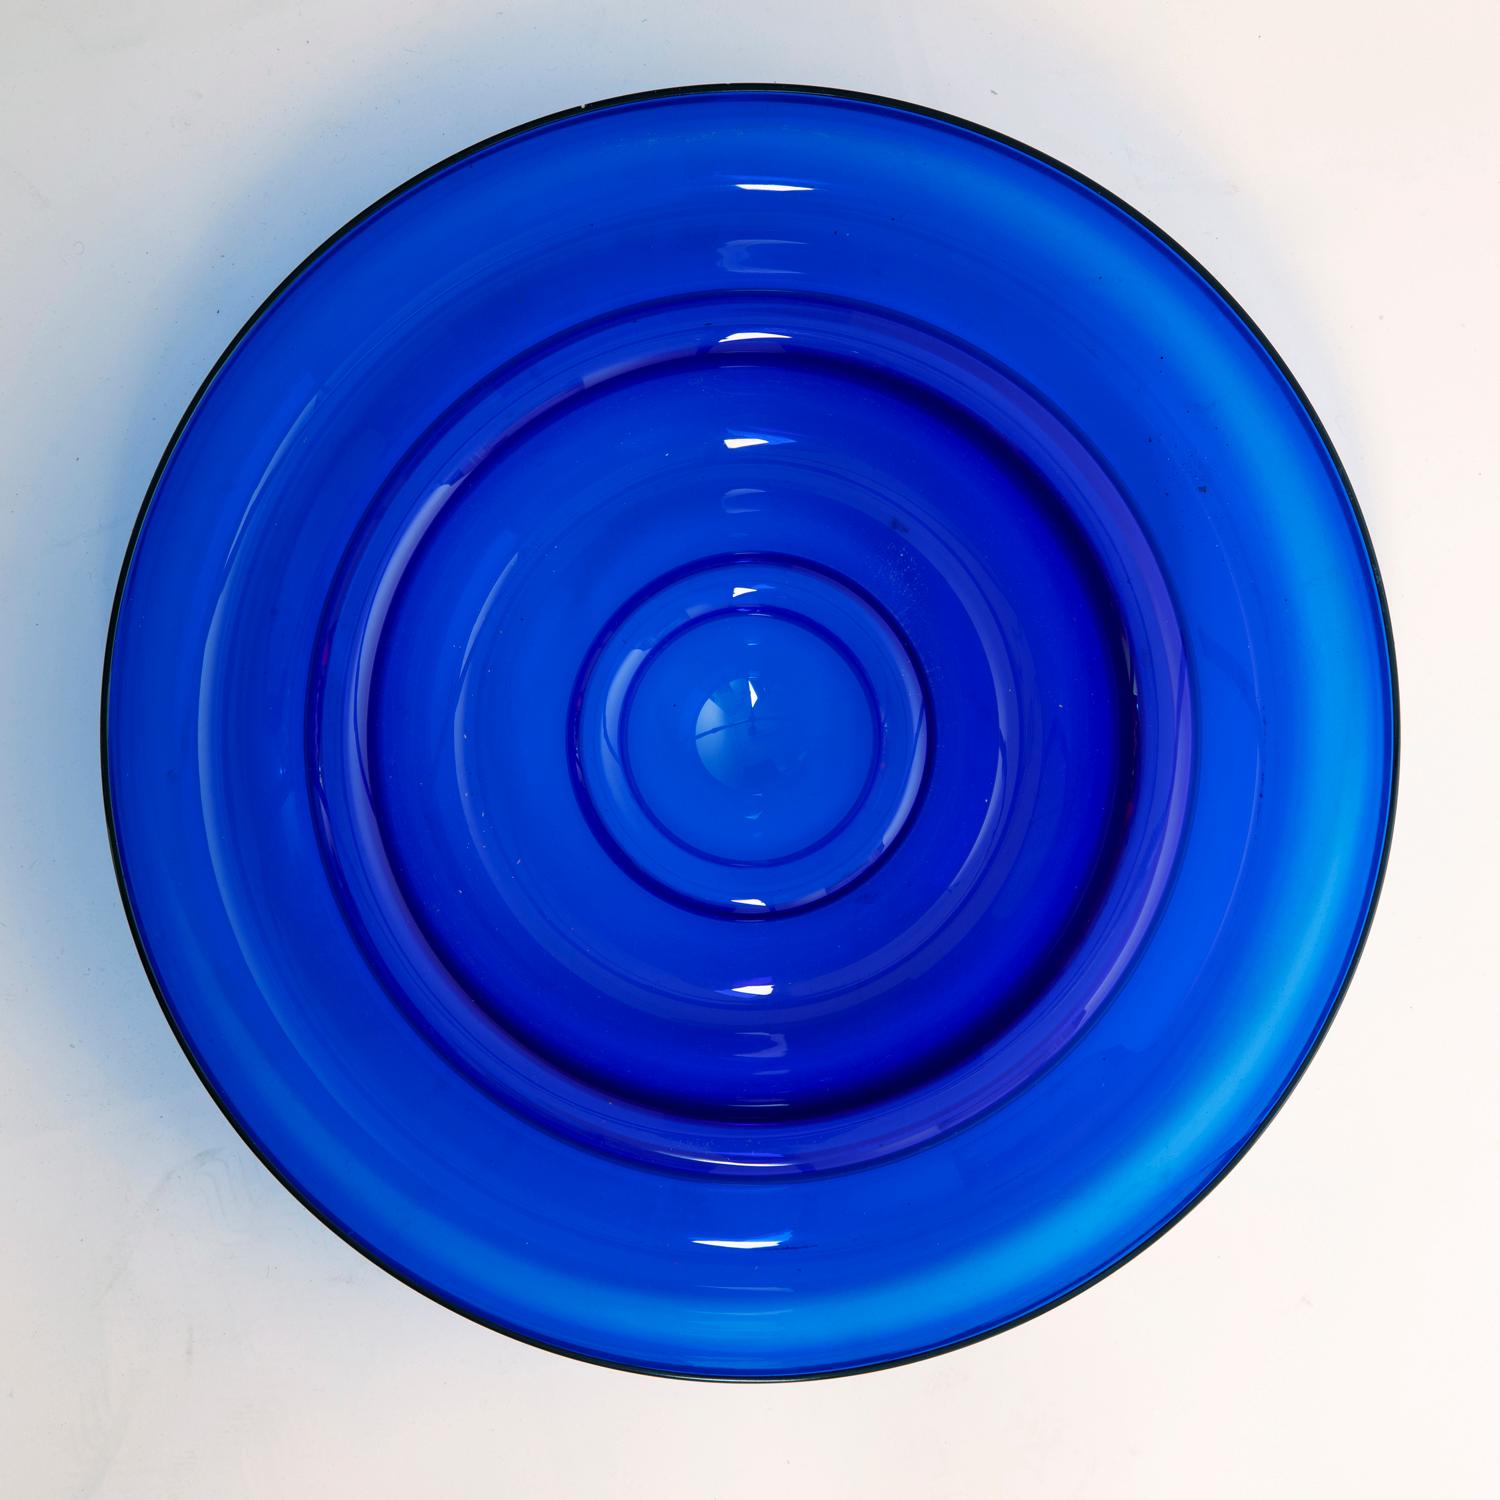 Late 20th Century Murano Blue Glass Centrepiece by Vistosi, 1974